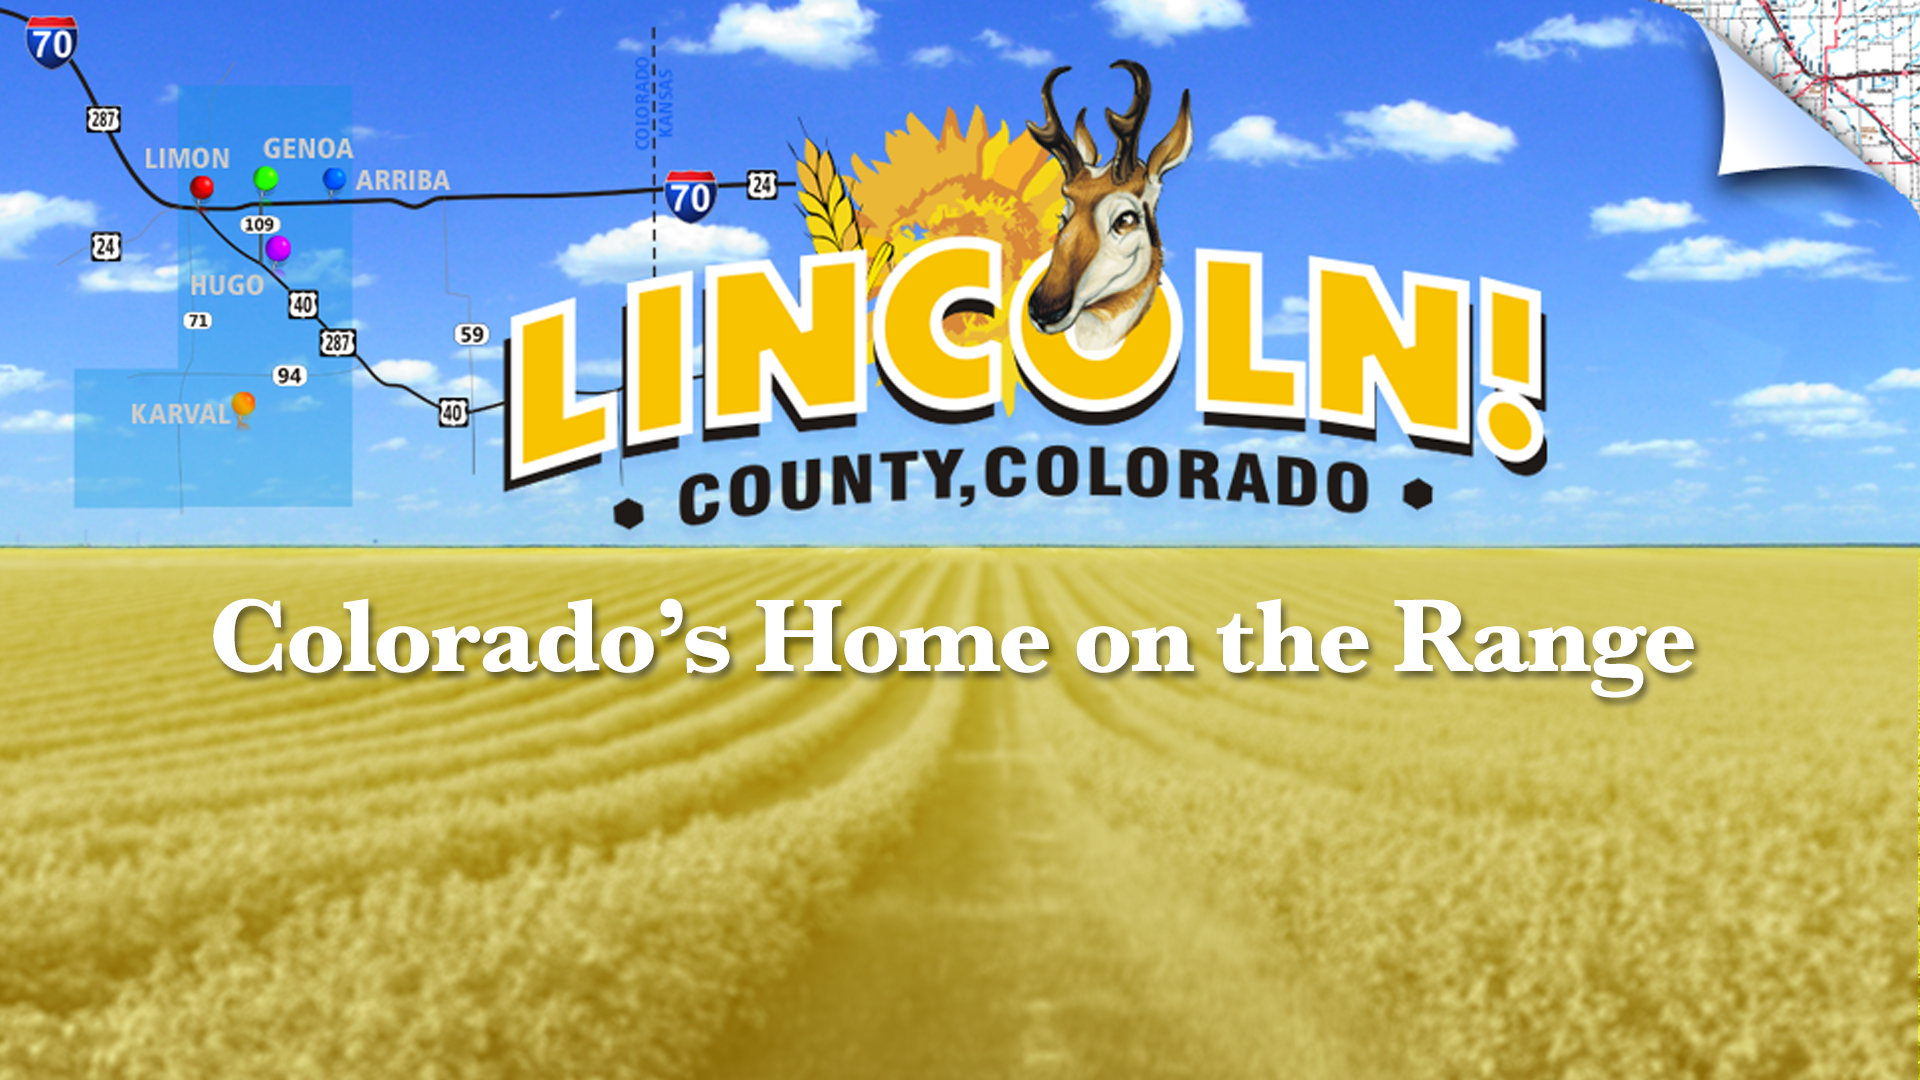 See Lincoln County Colorado